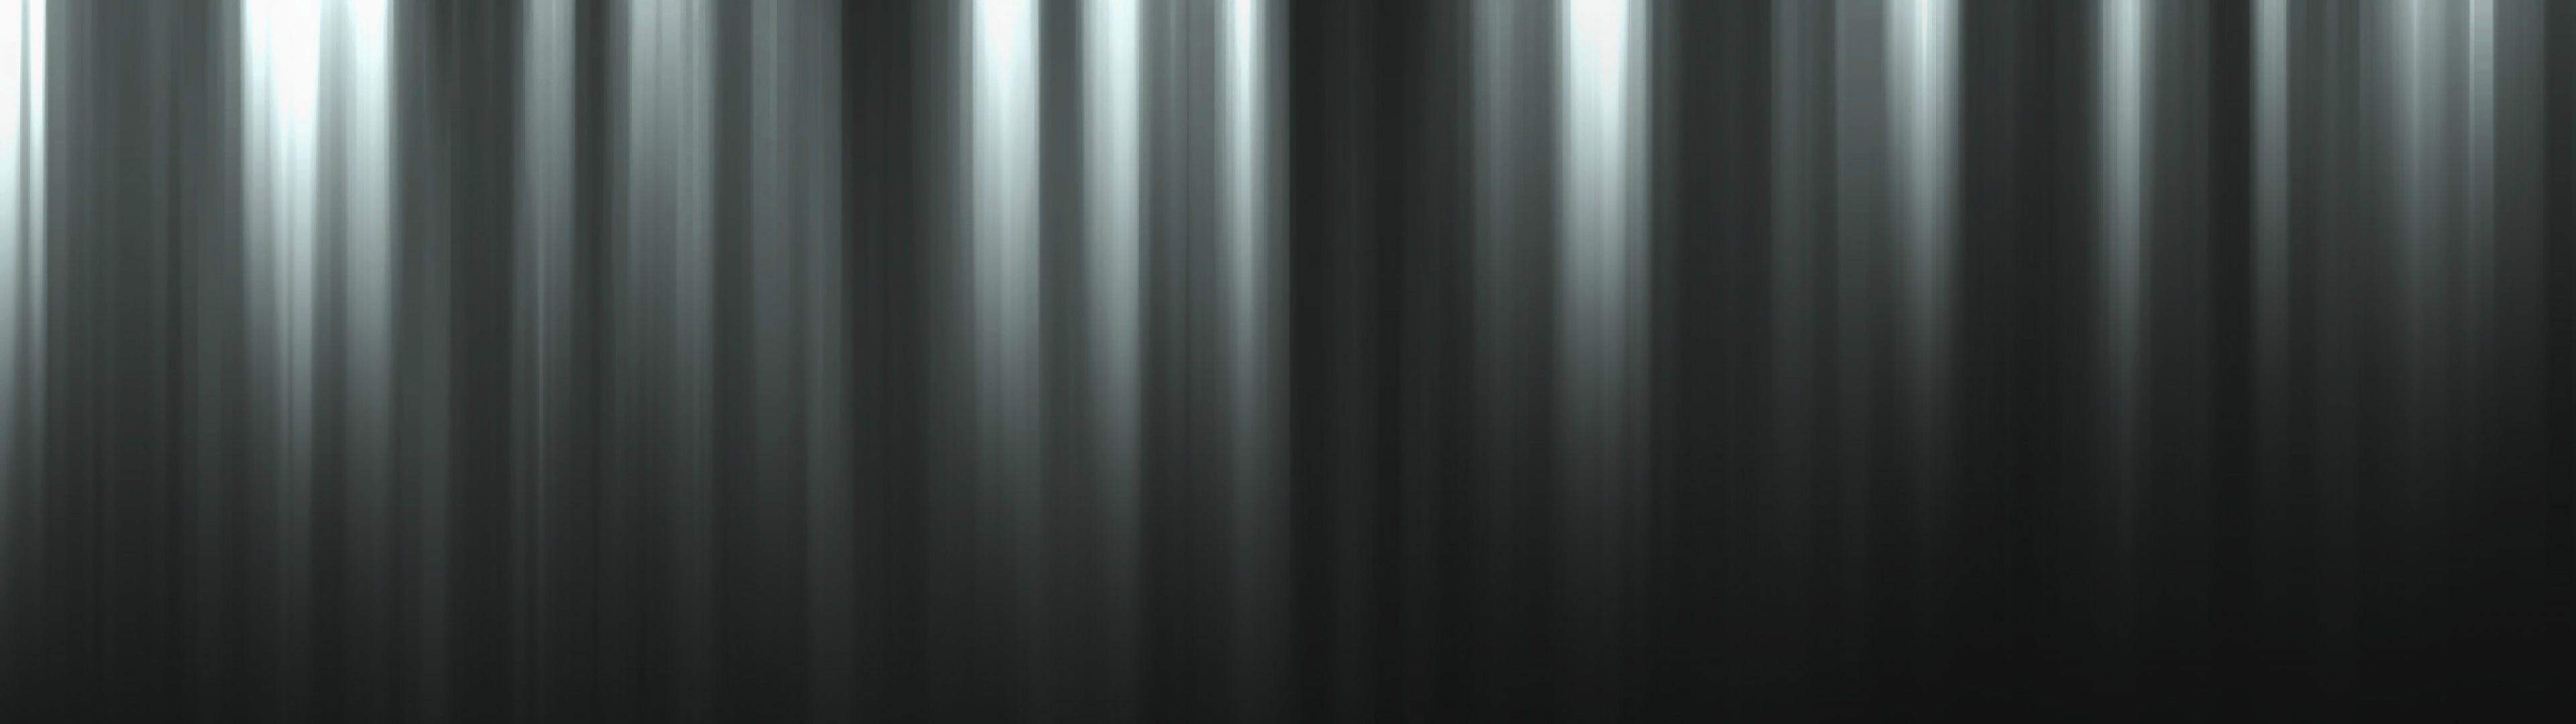 fondos de pantalla de dos monitores,negro,ligero,línea,marrón,atmósfera